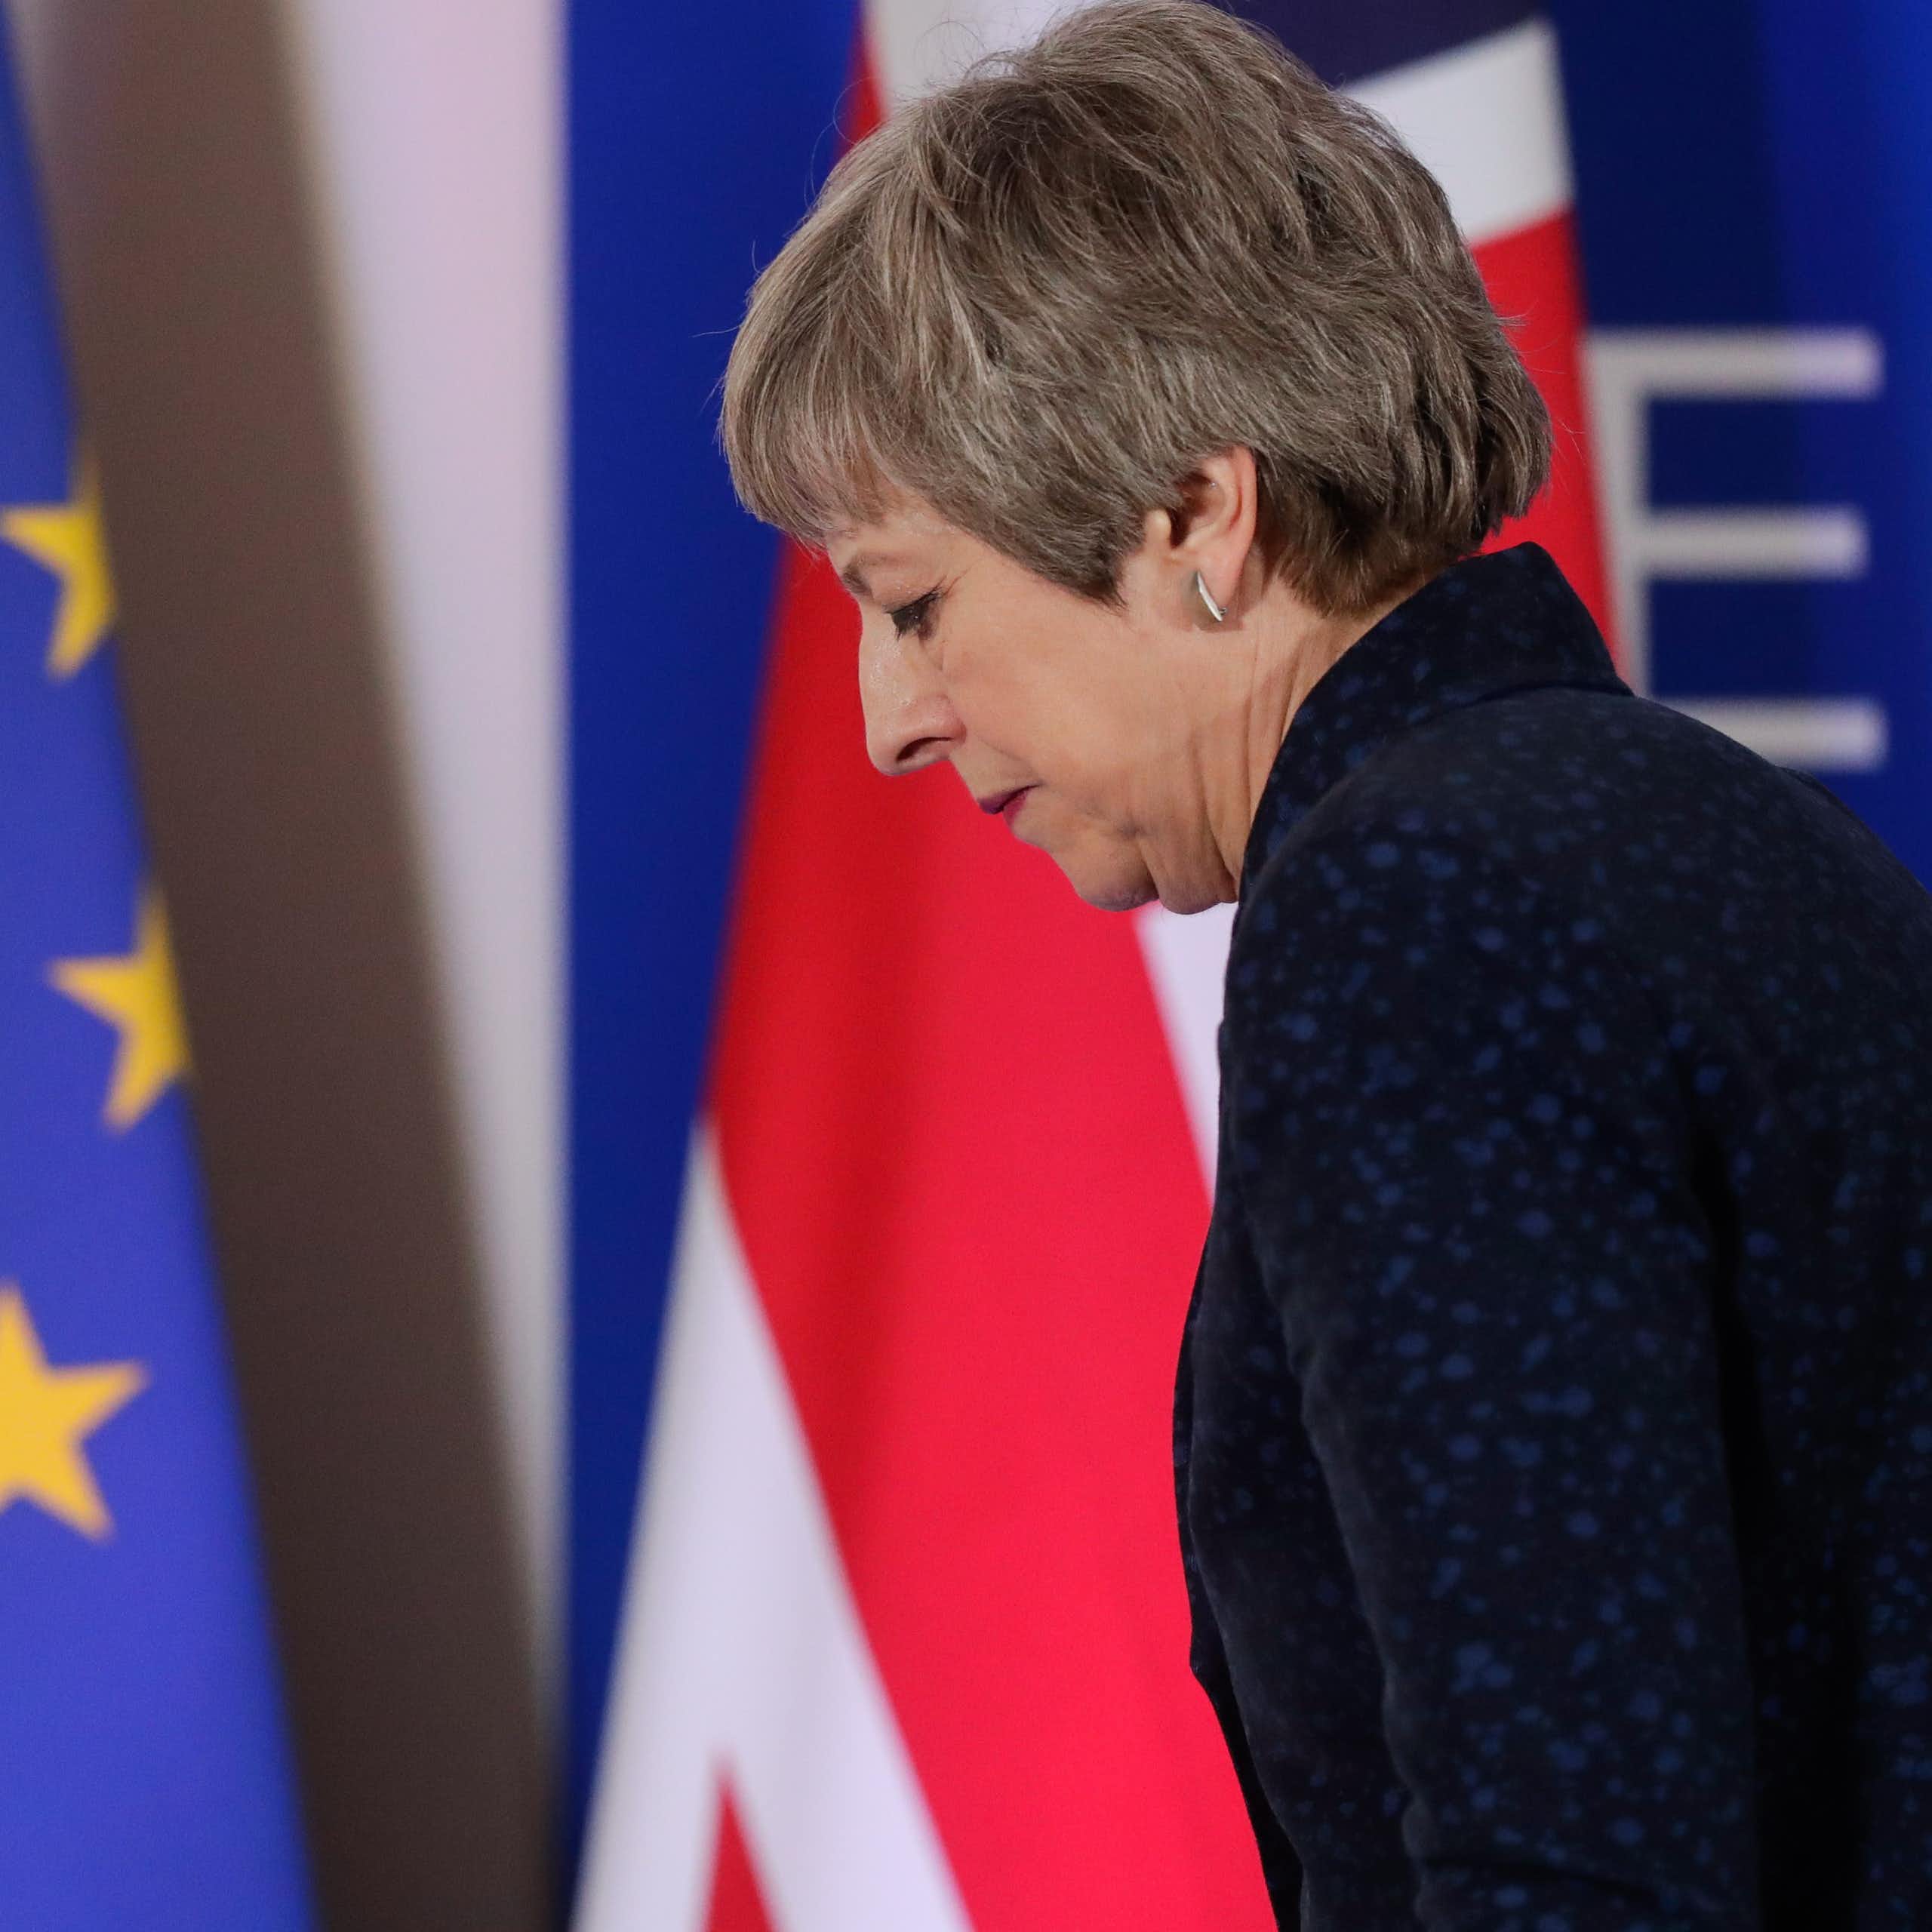 Theresa May sadly walking in front of an EU and UK flag